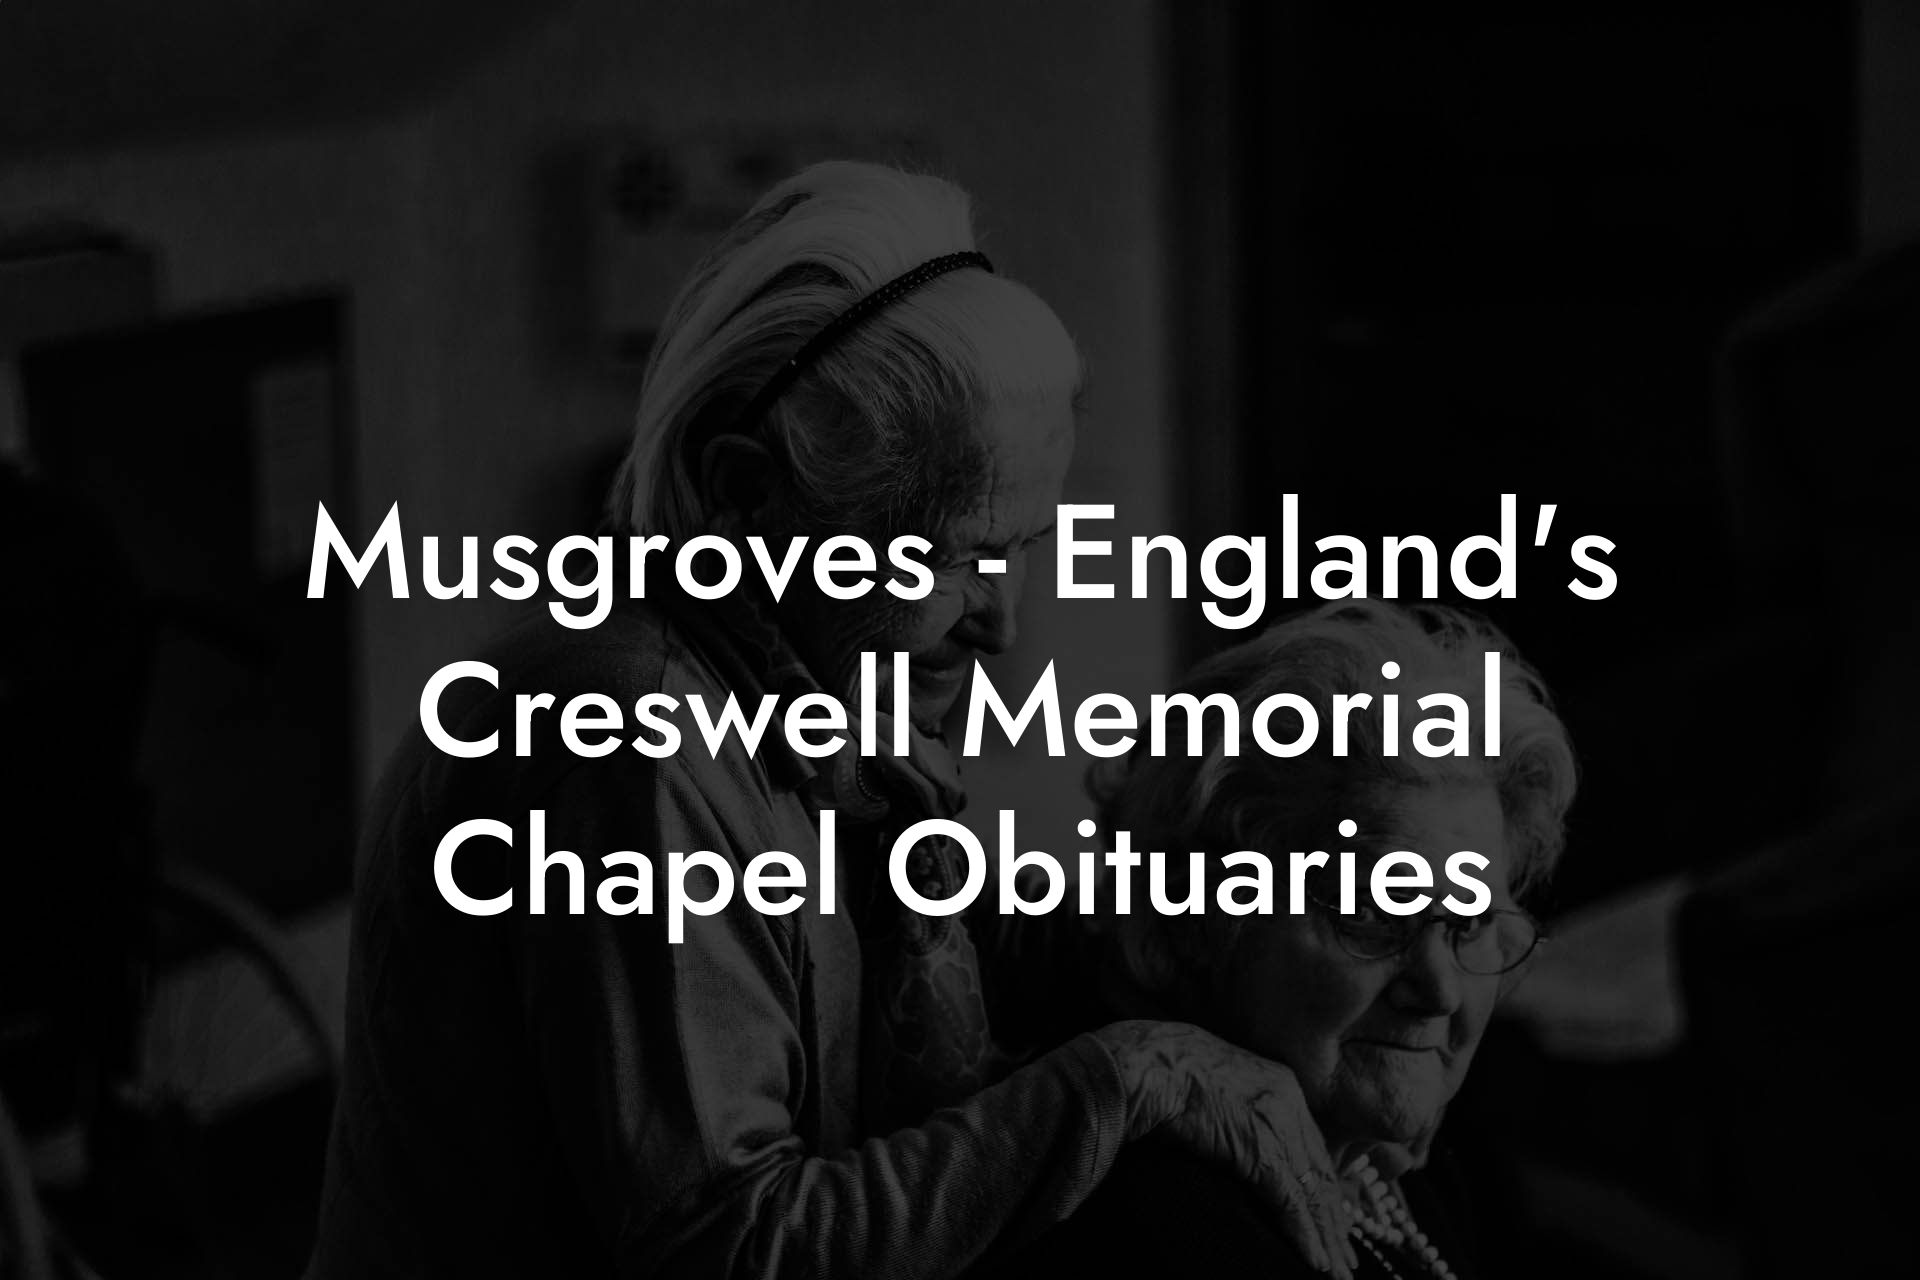 Musgroves - England's Creswell Memorial Chapel Obituaries